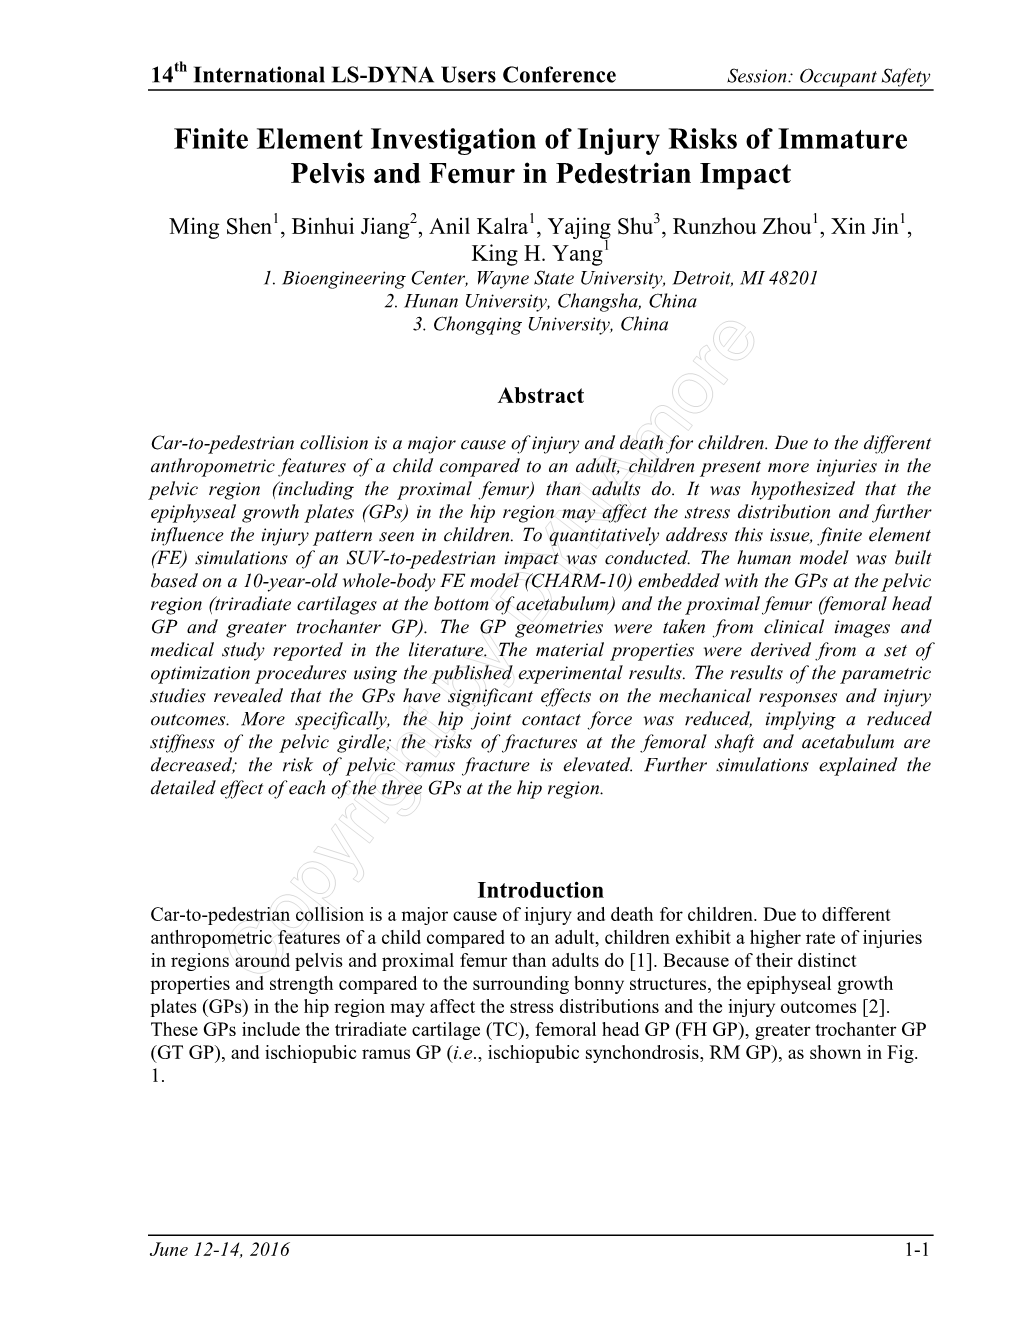 Finite Element Investigation of Injury Risks of Immature Pelvis and Femur in Pedestrian Impact